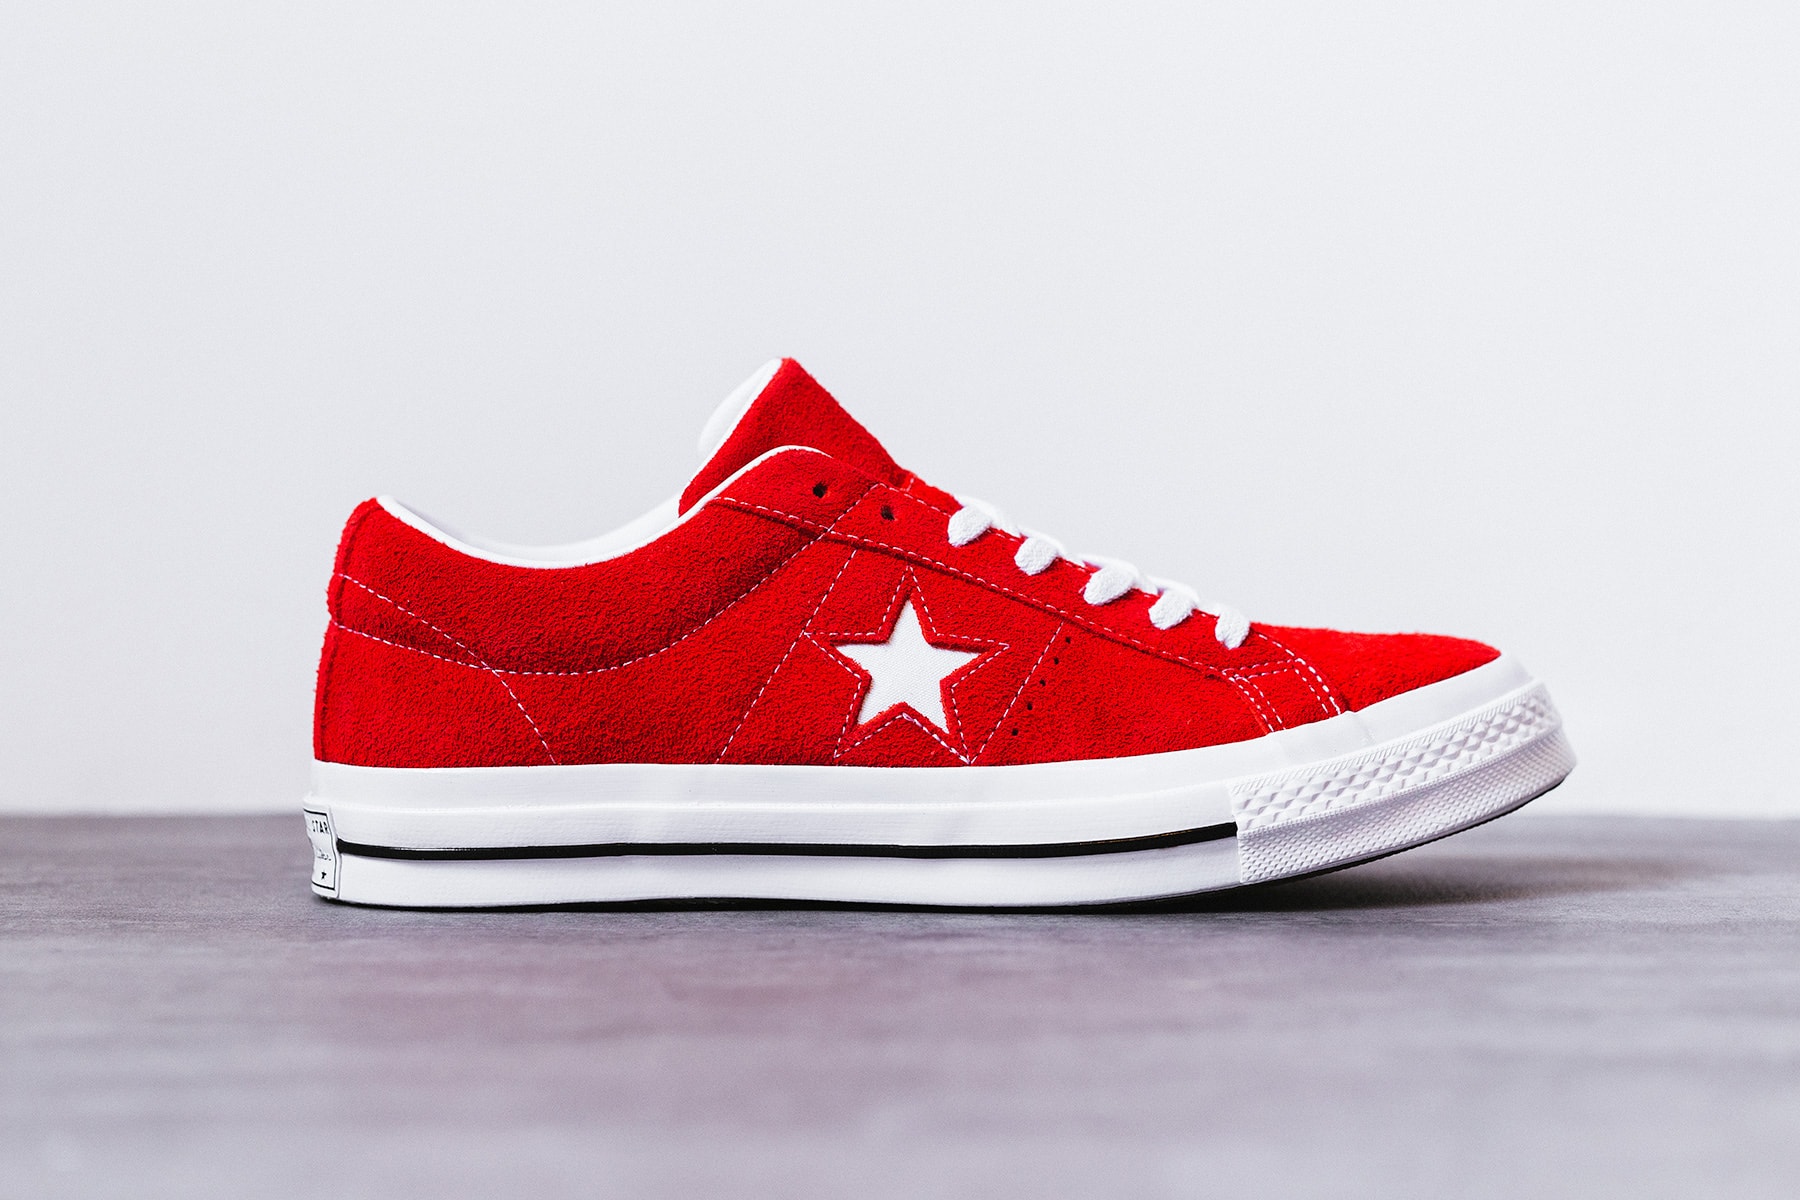 Converse One Star 全新 Premium Suede 鞋款已在 HBX 上架